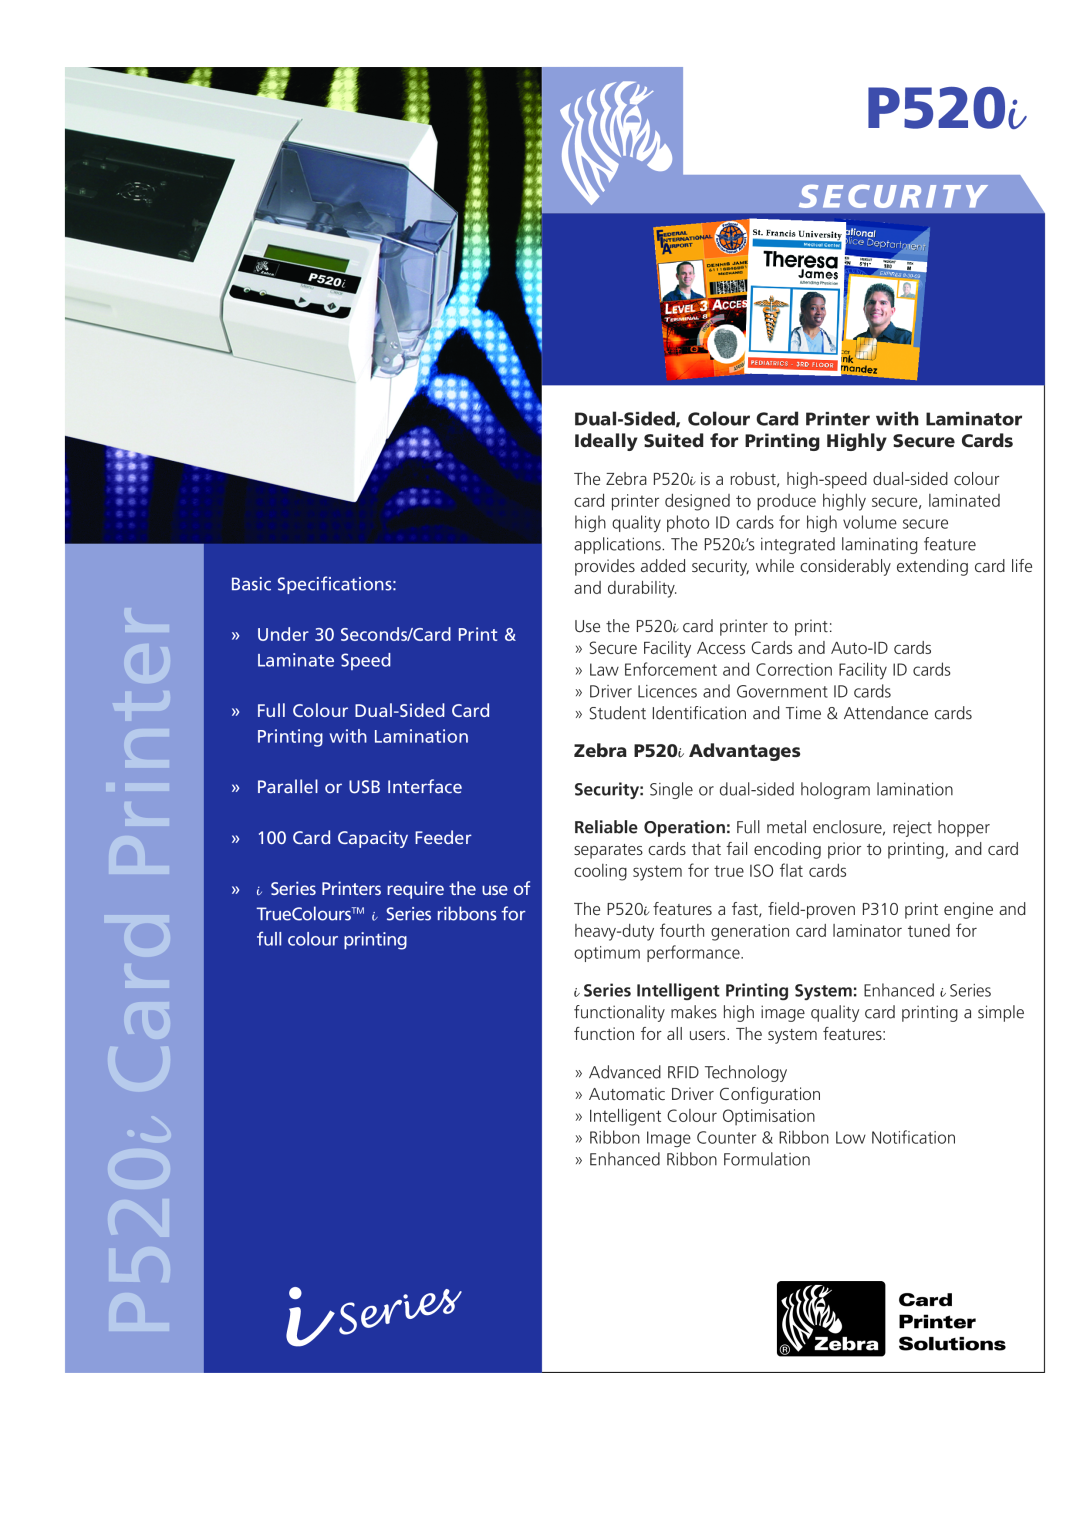 Zebra Technologies specifications P520i Card Printer, S E C U R I Ty 